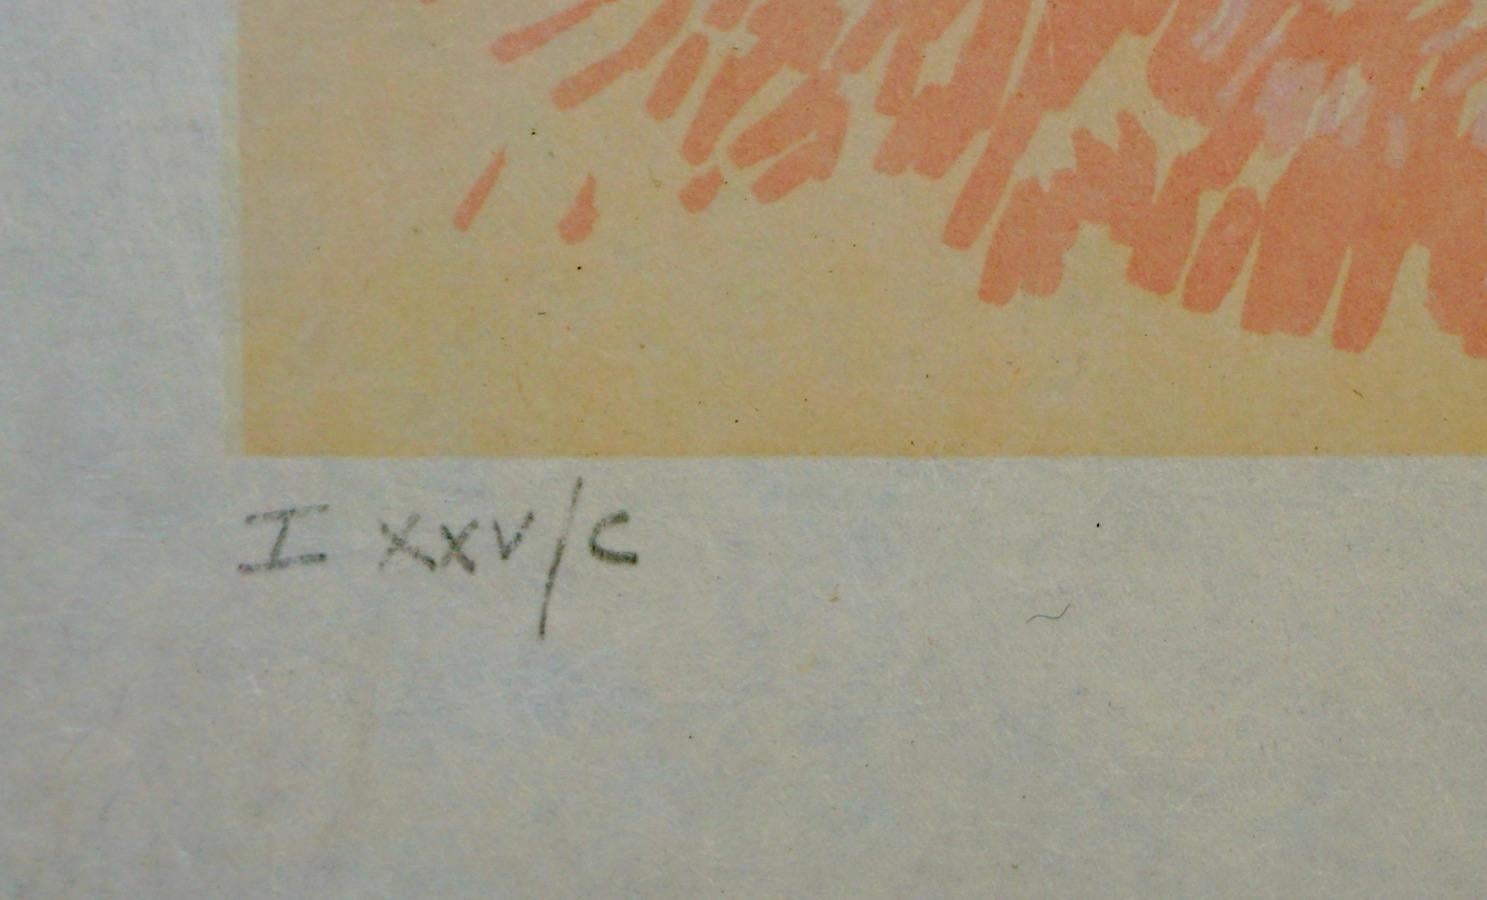 ARTIST: Salvador Dali

TITLE: Triumph of Love Le Triomphe

MEDIUM: Lithograph

SIGNED: Hand Signed

PUBLISHER: Levine & Levine for DALART

EDITION NUMBER: I XXV/C

MEASUREMENTS: 22.87